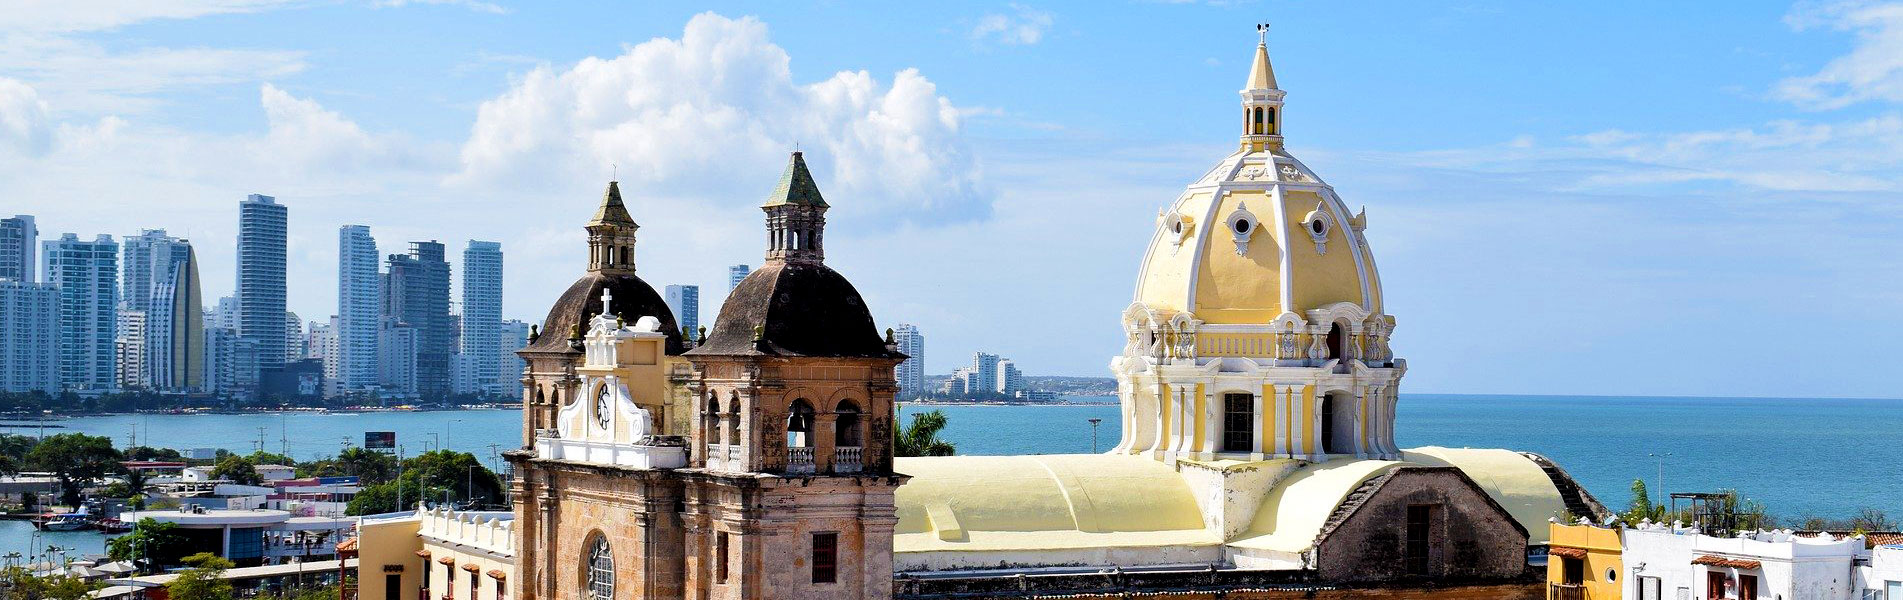 Cartagena City